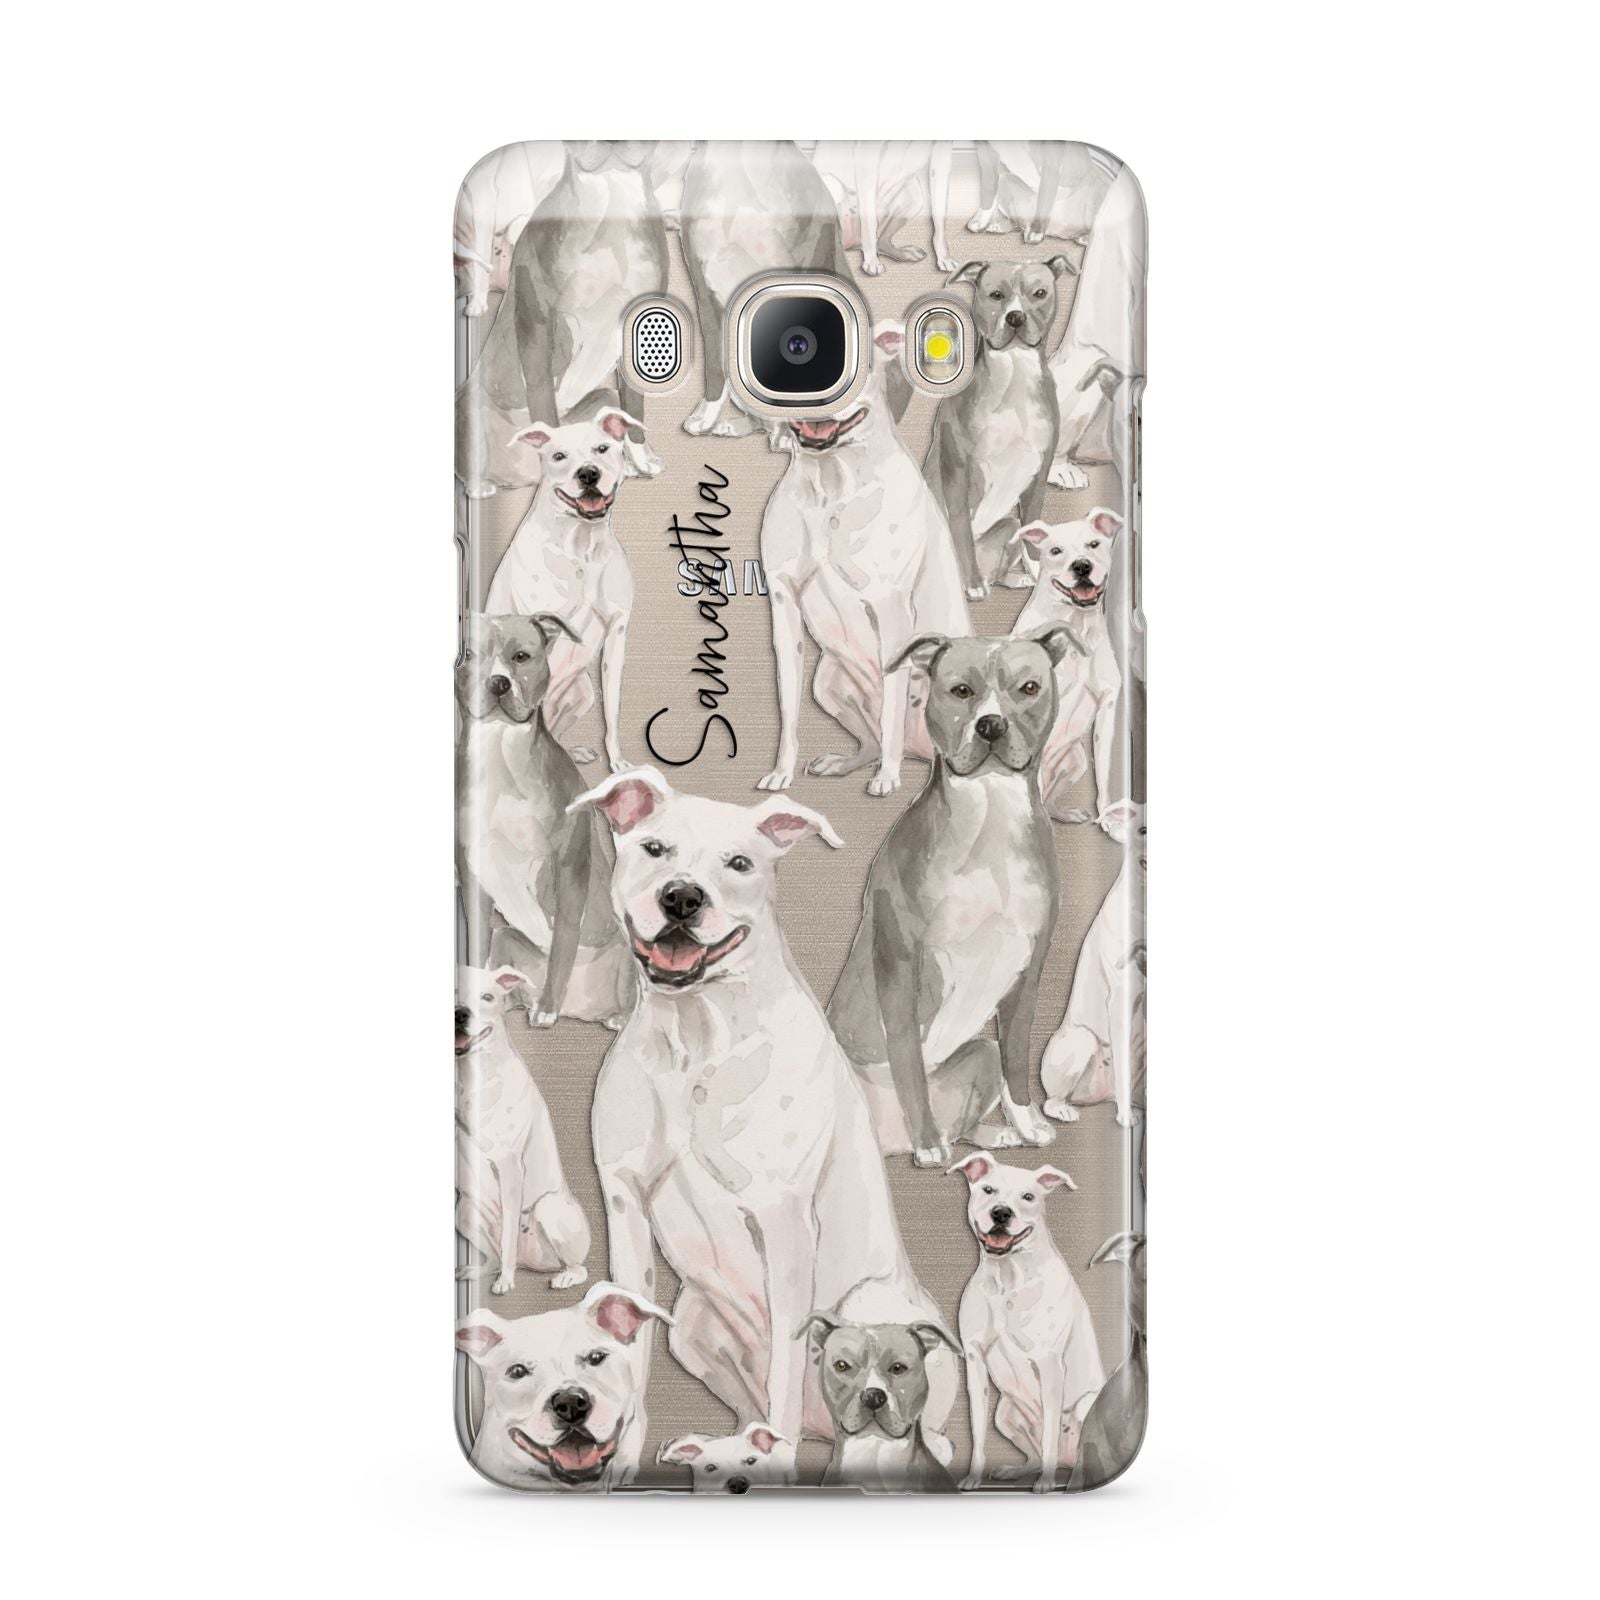 Personalised Staffordshire Dog Samsung Galaxy J5 2016 Case